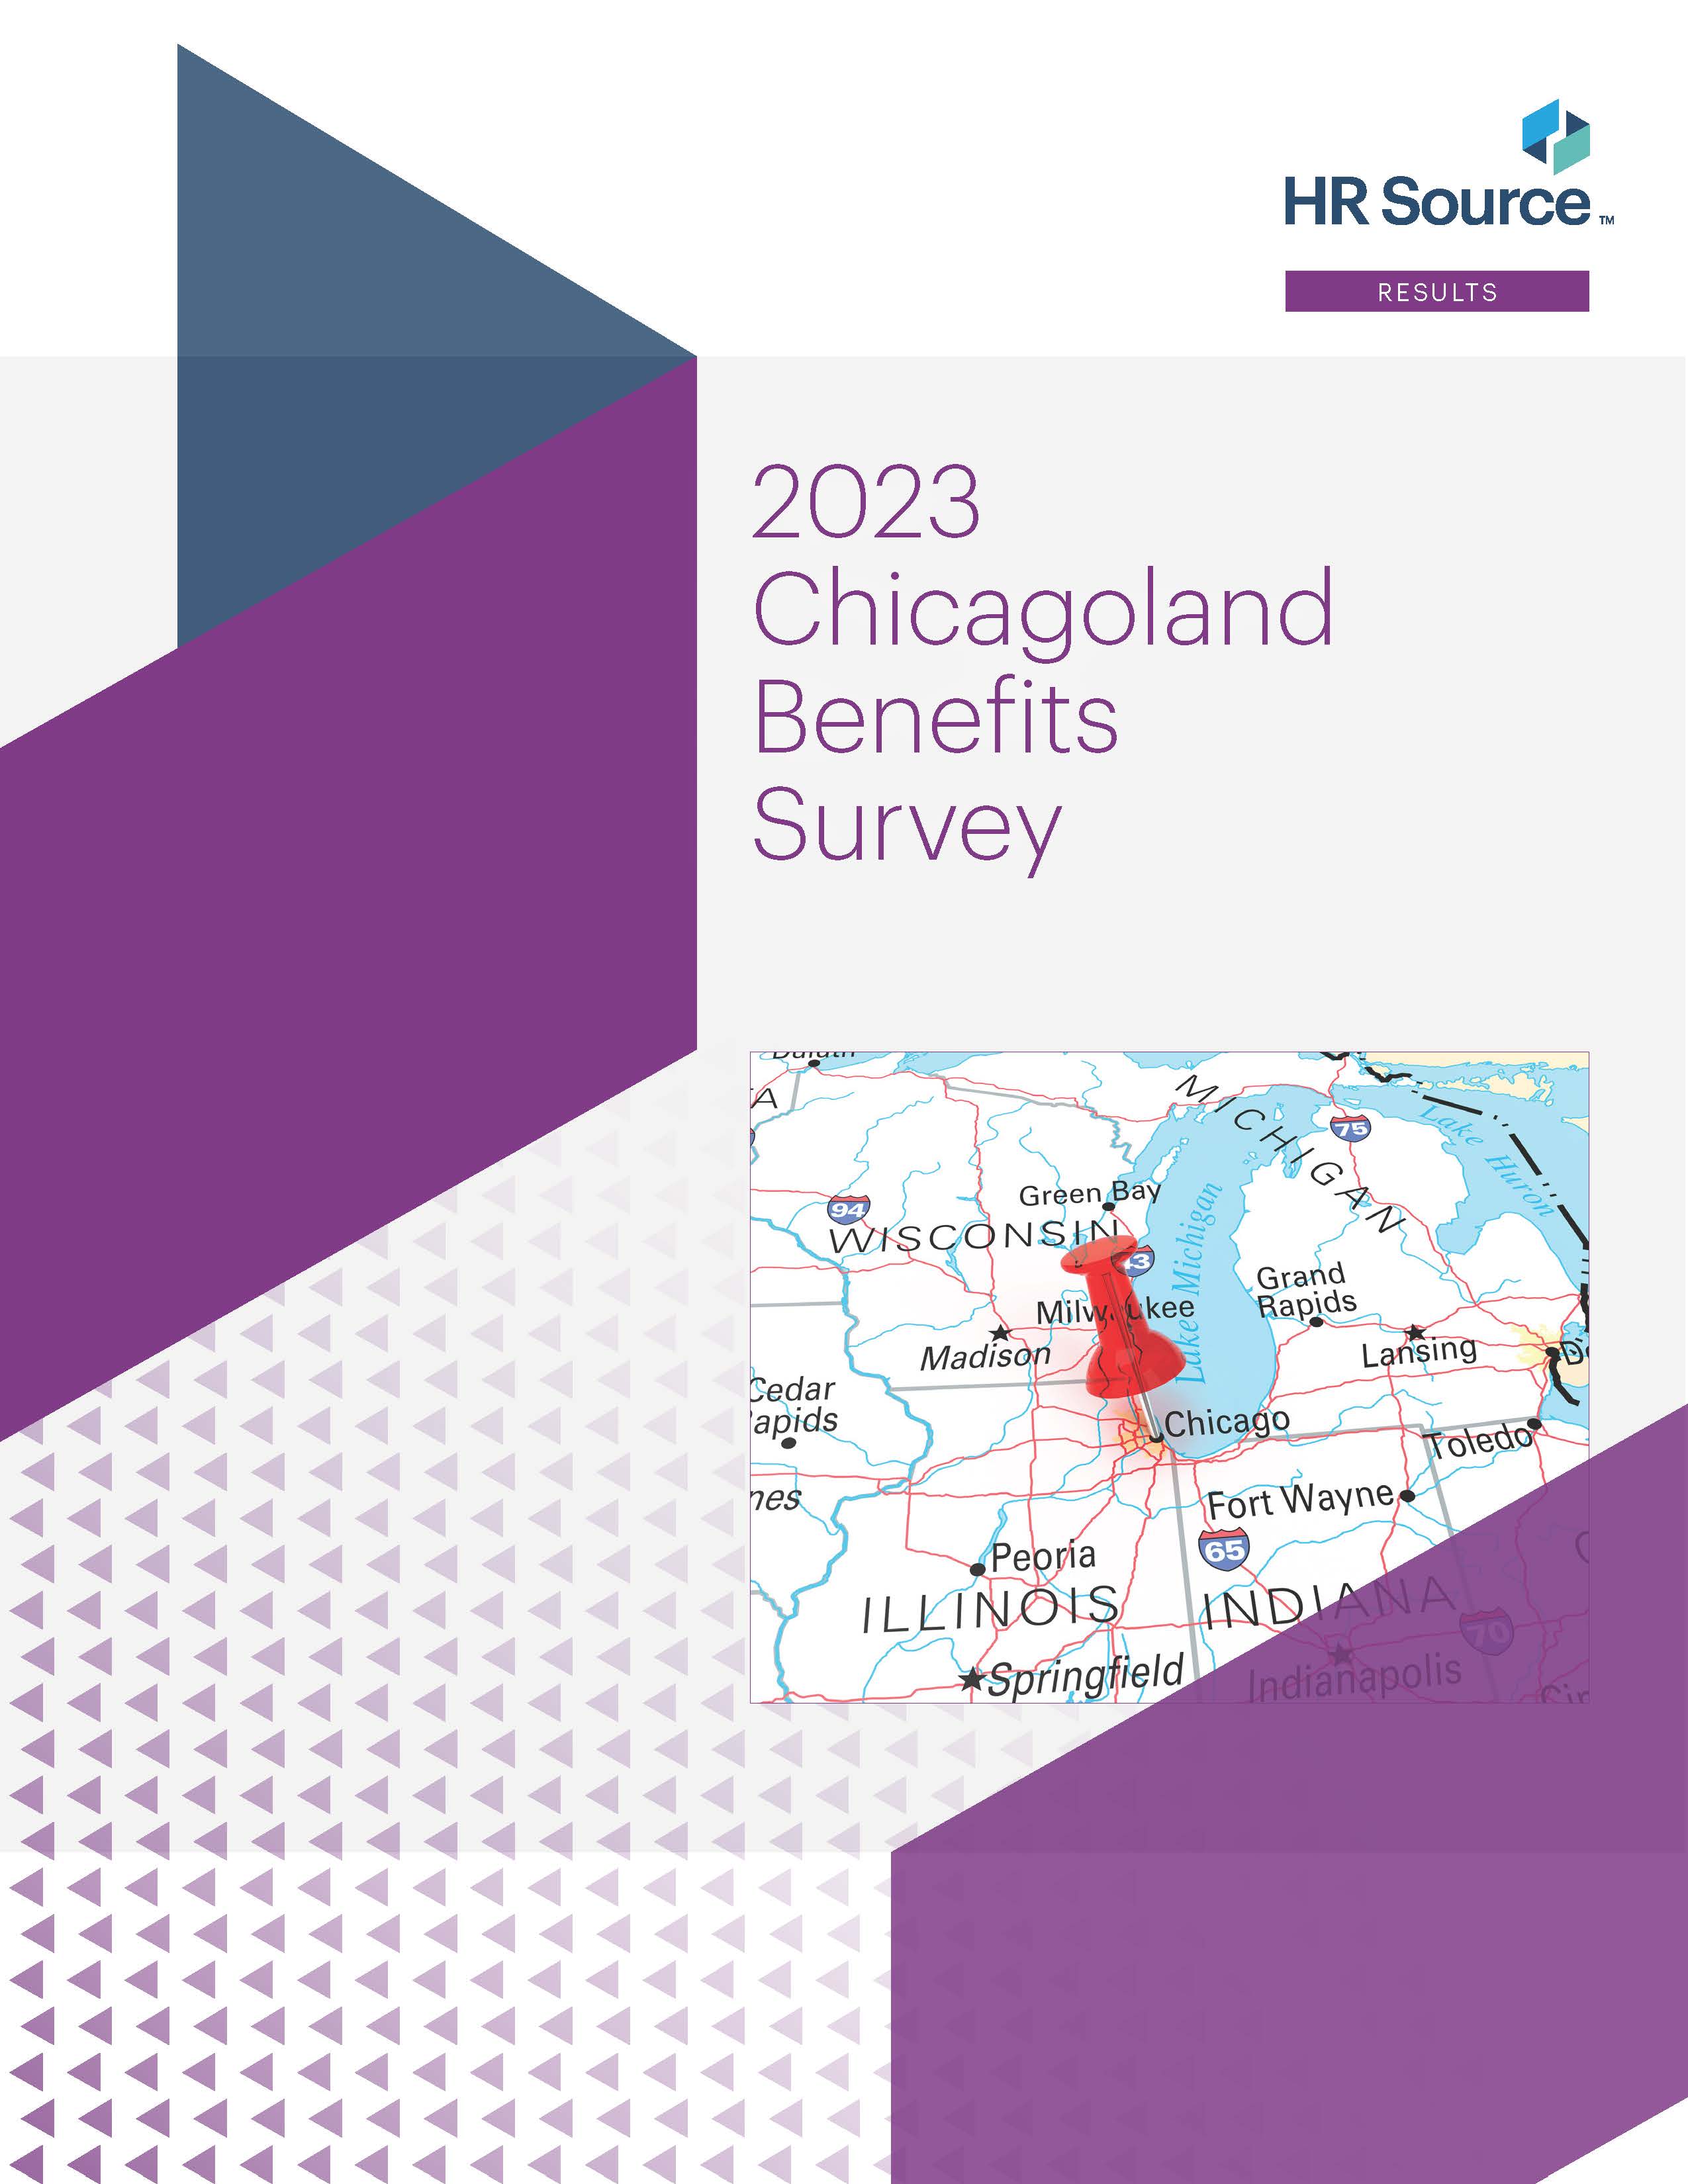 Chicagoland Benefits Survey 2023